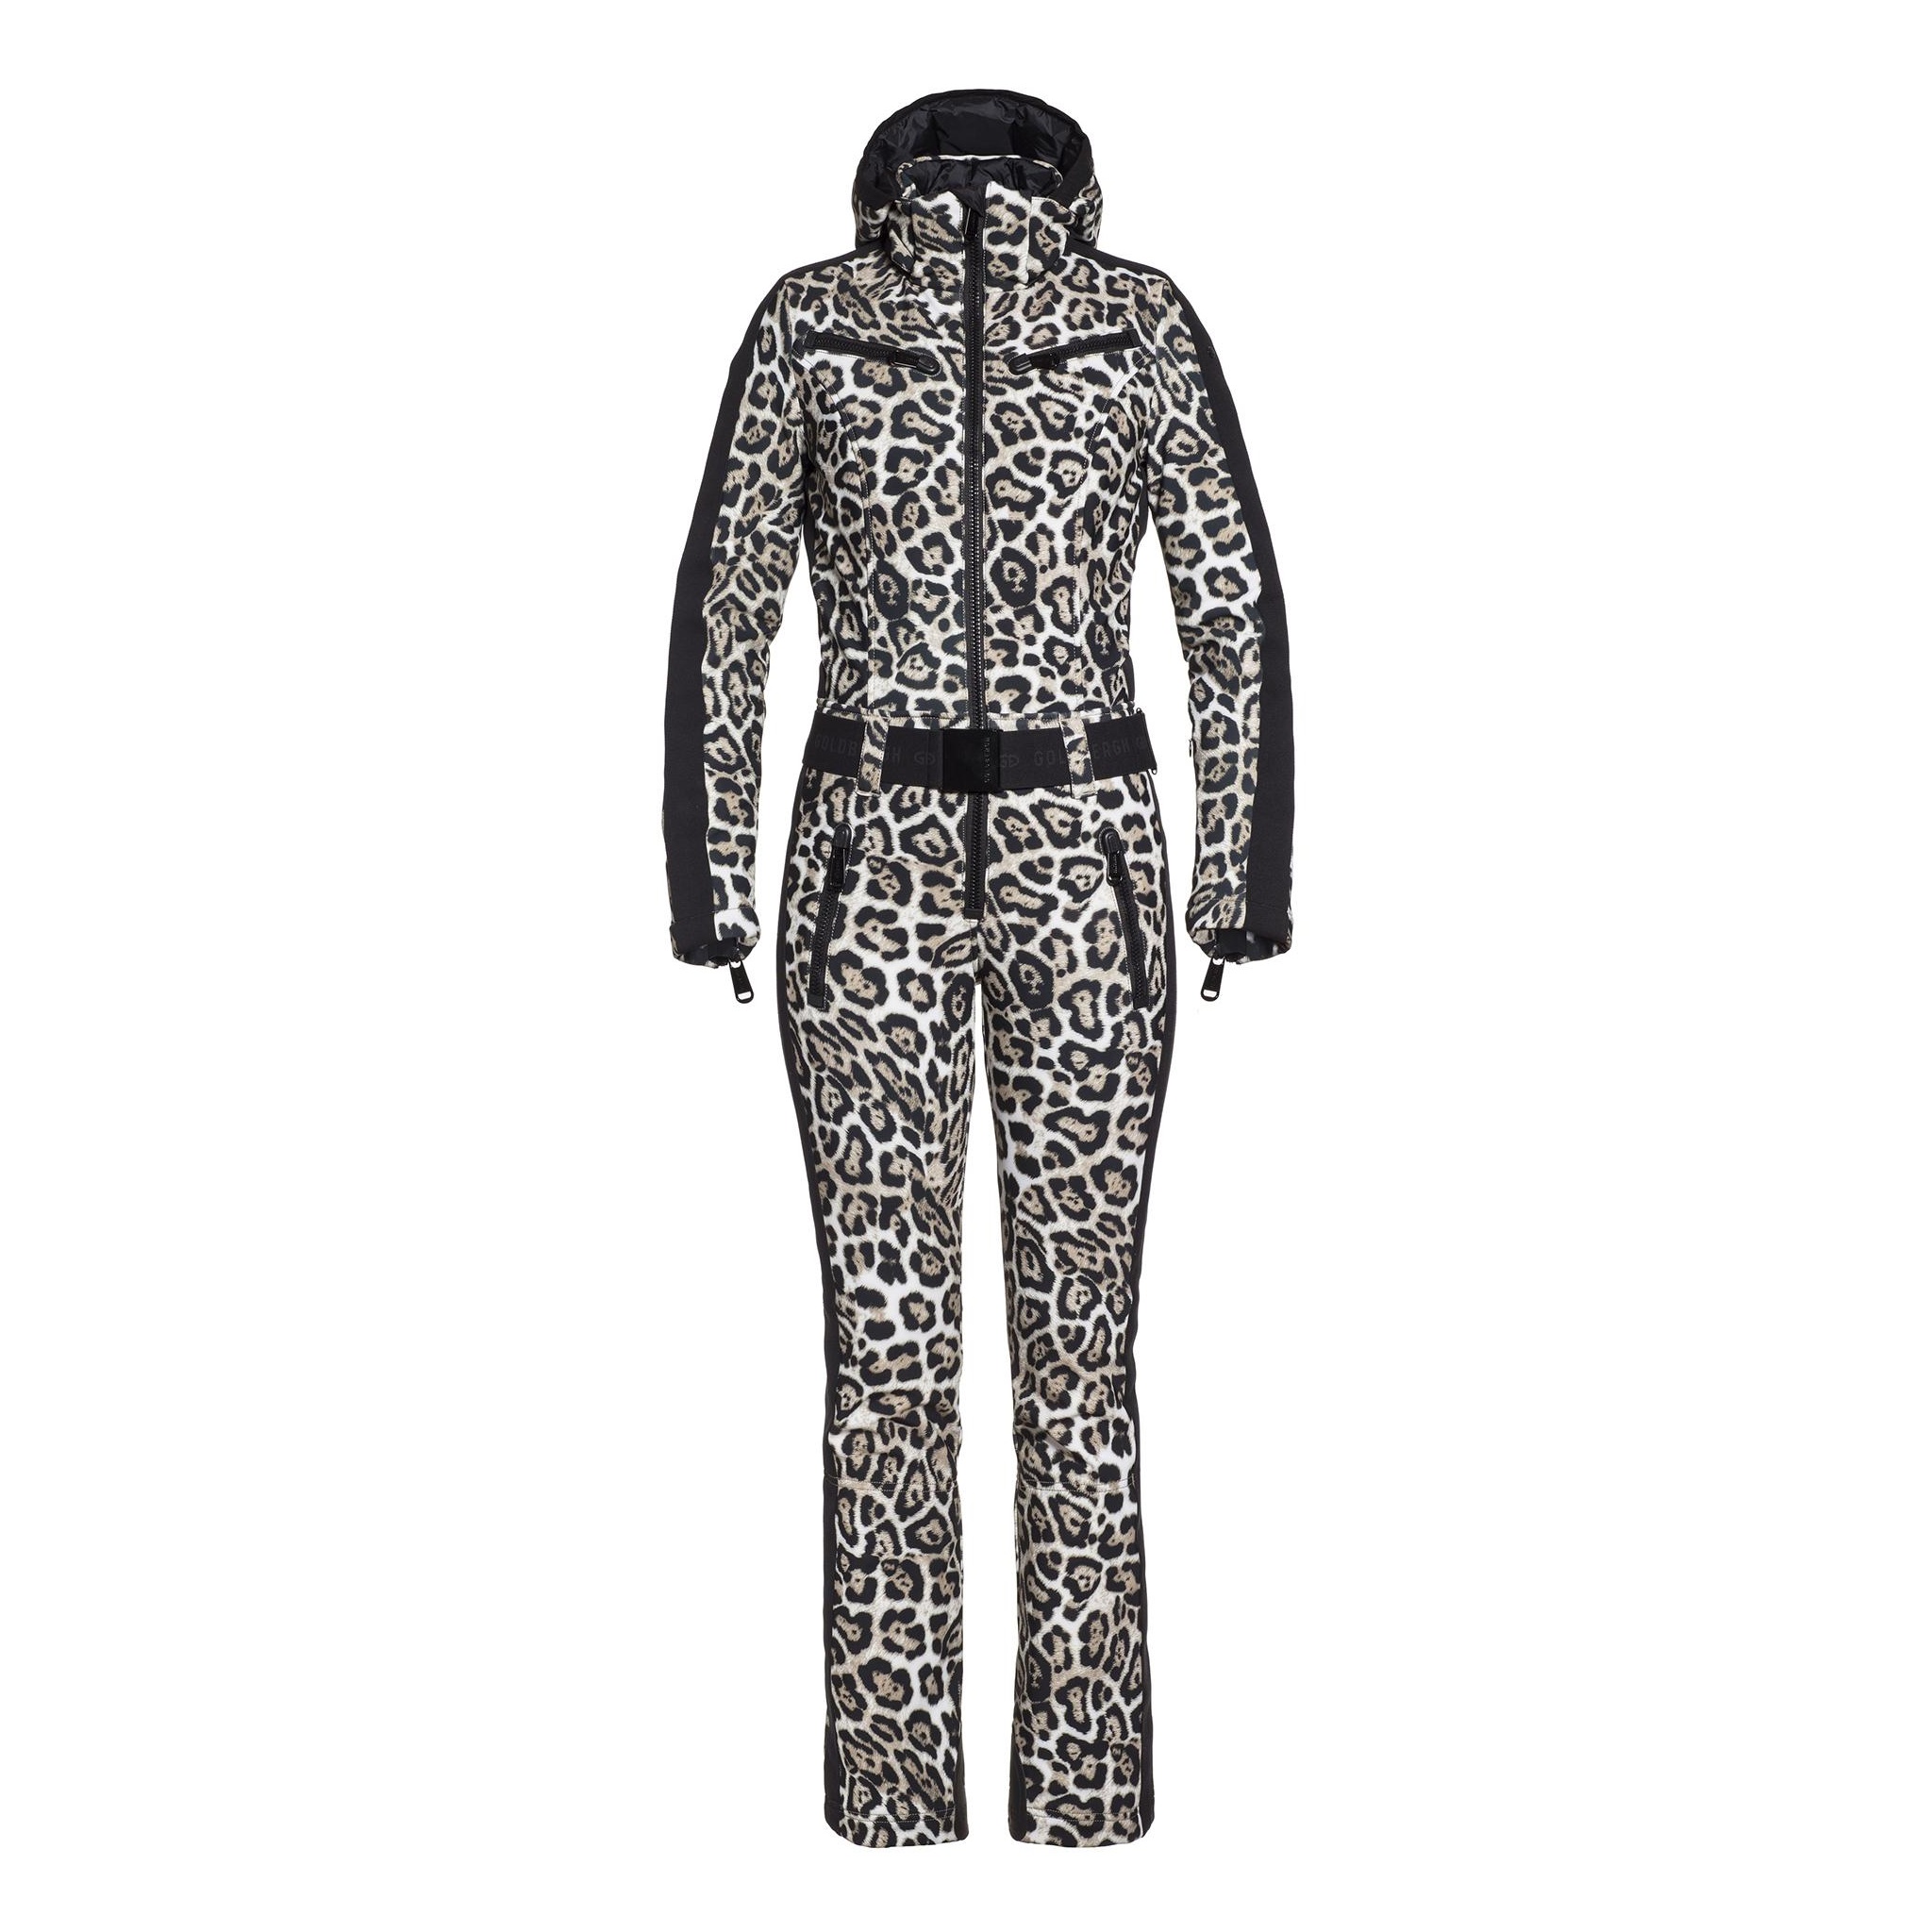 Geci Ski & Snow -  goldbergh Cougar Ski Suit